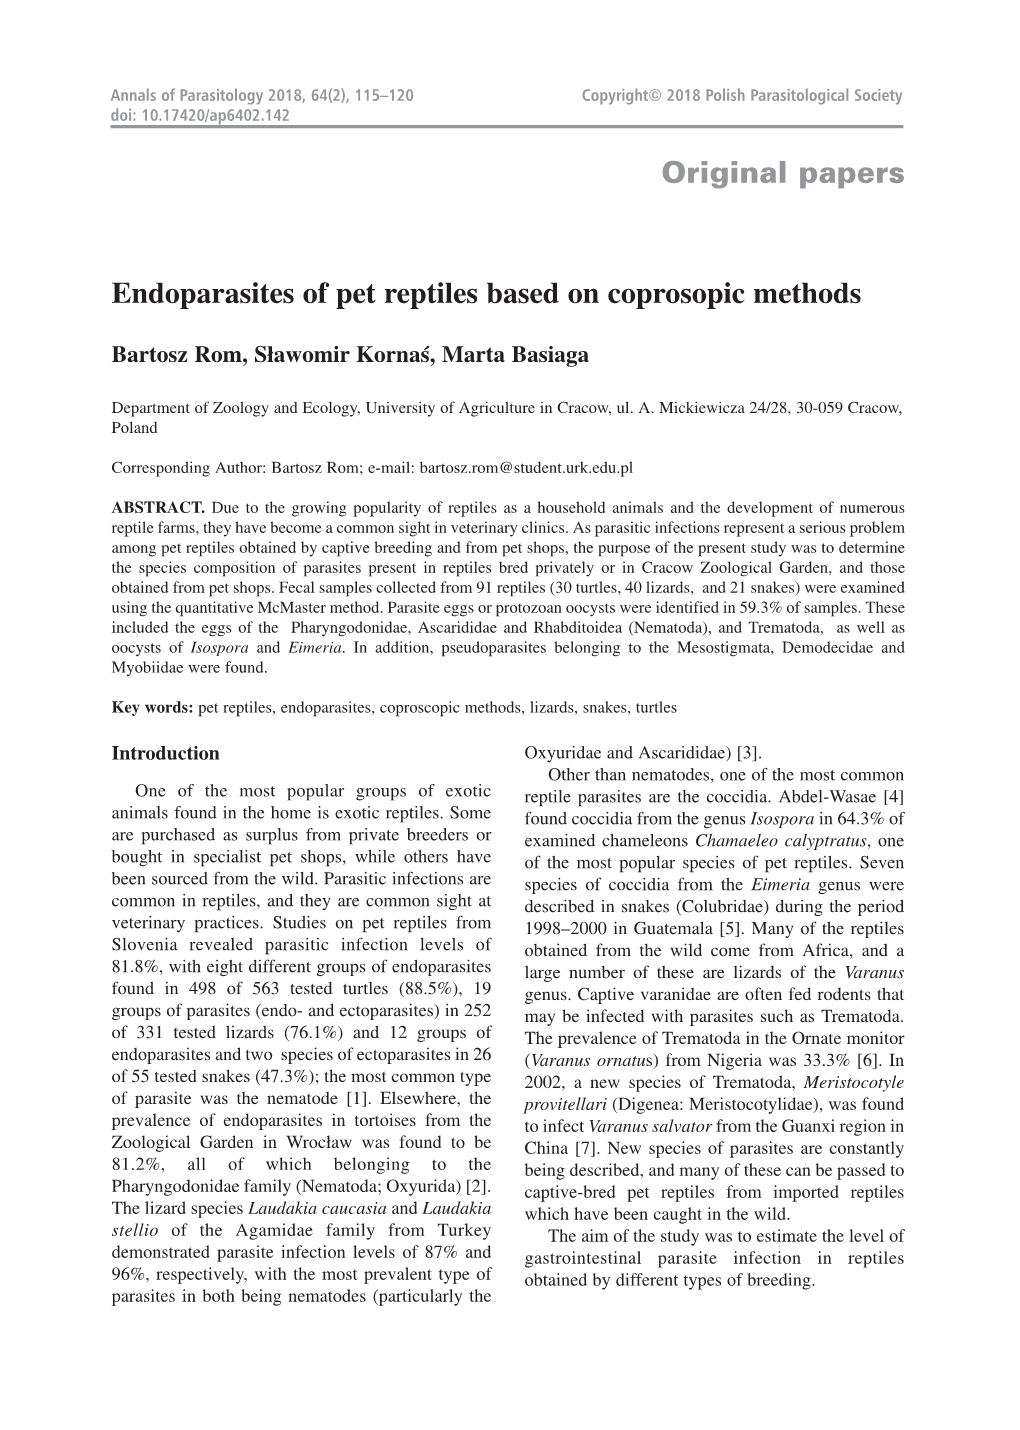 Original Papers Endoparasites of Pet Reptiles Based on Coprosopic Methods